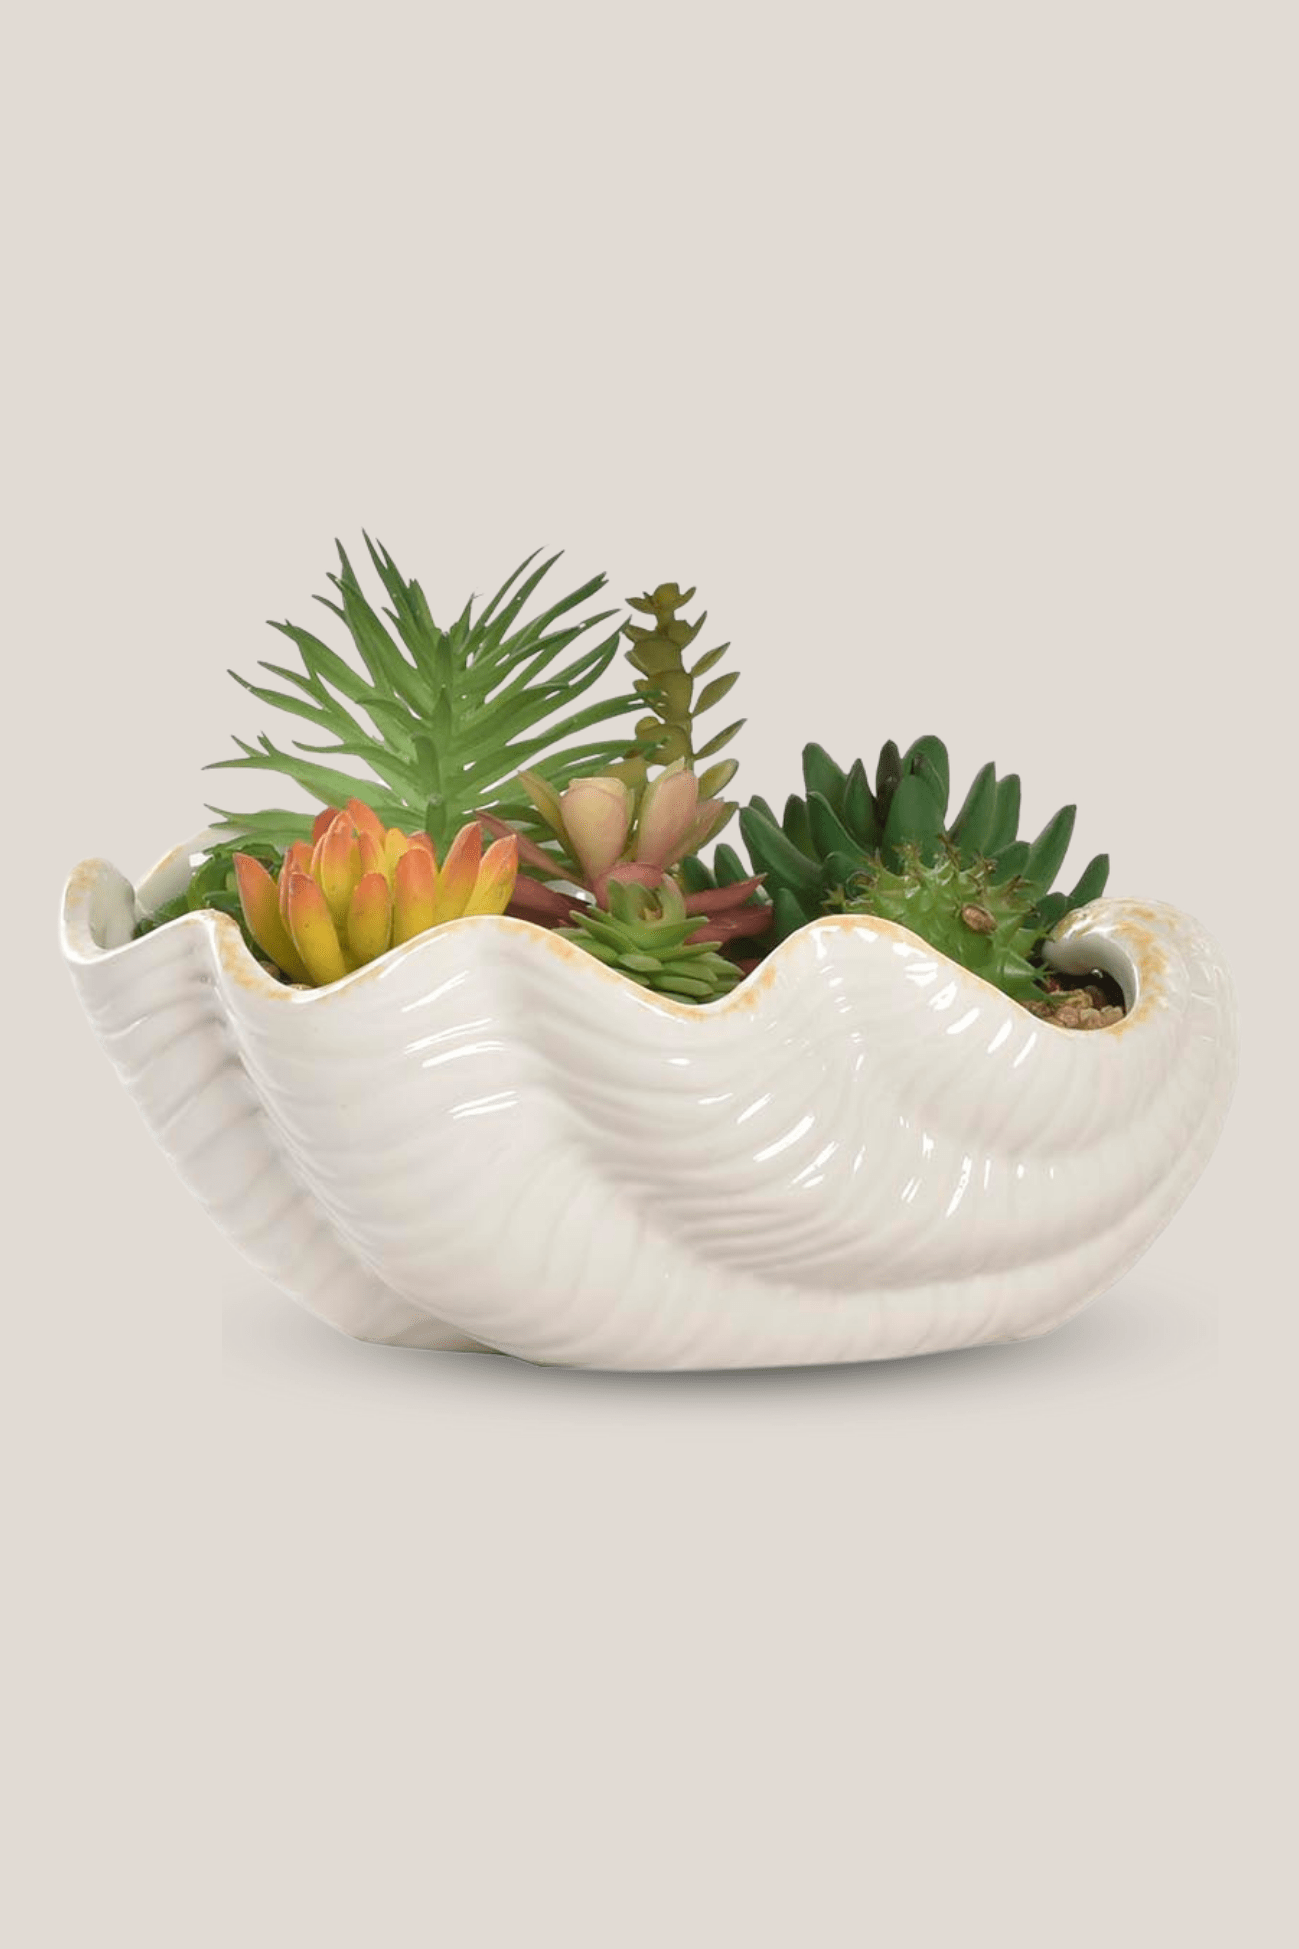 Item International Skal Piantina artificiale con vaso in ceramica a forma di conchiglia